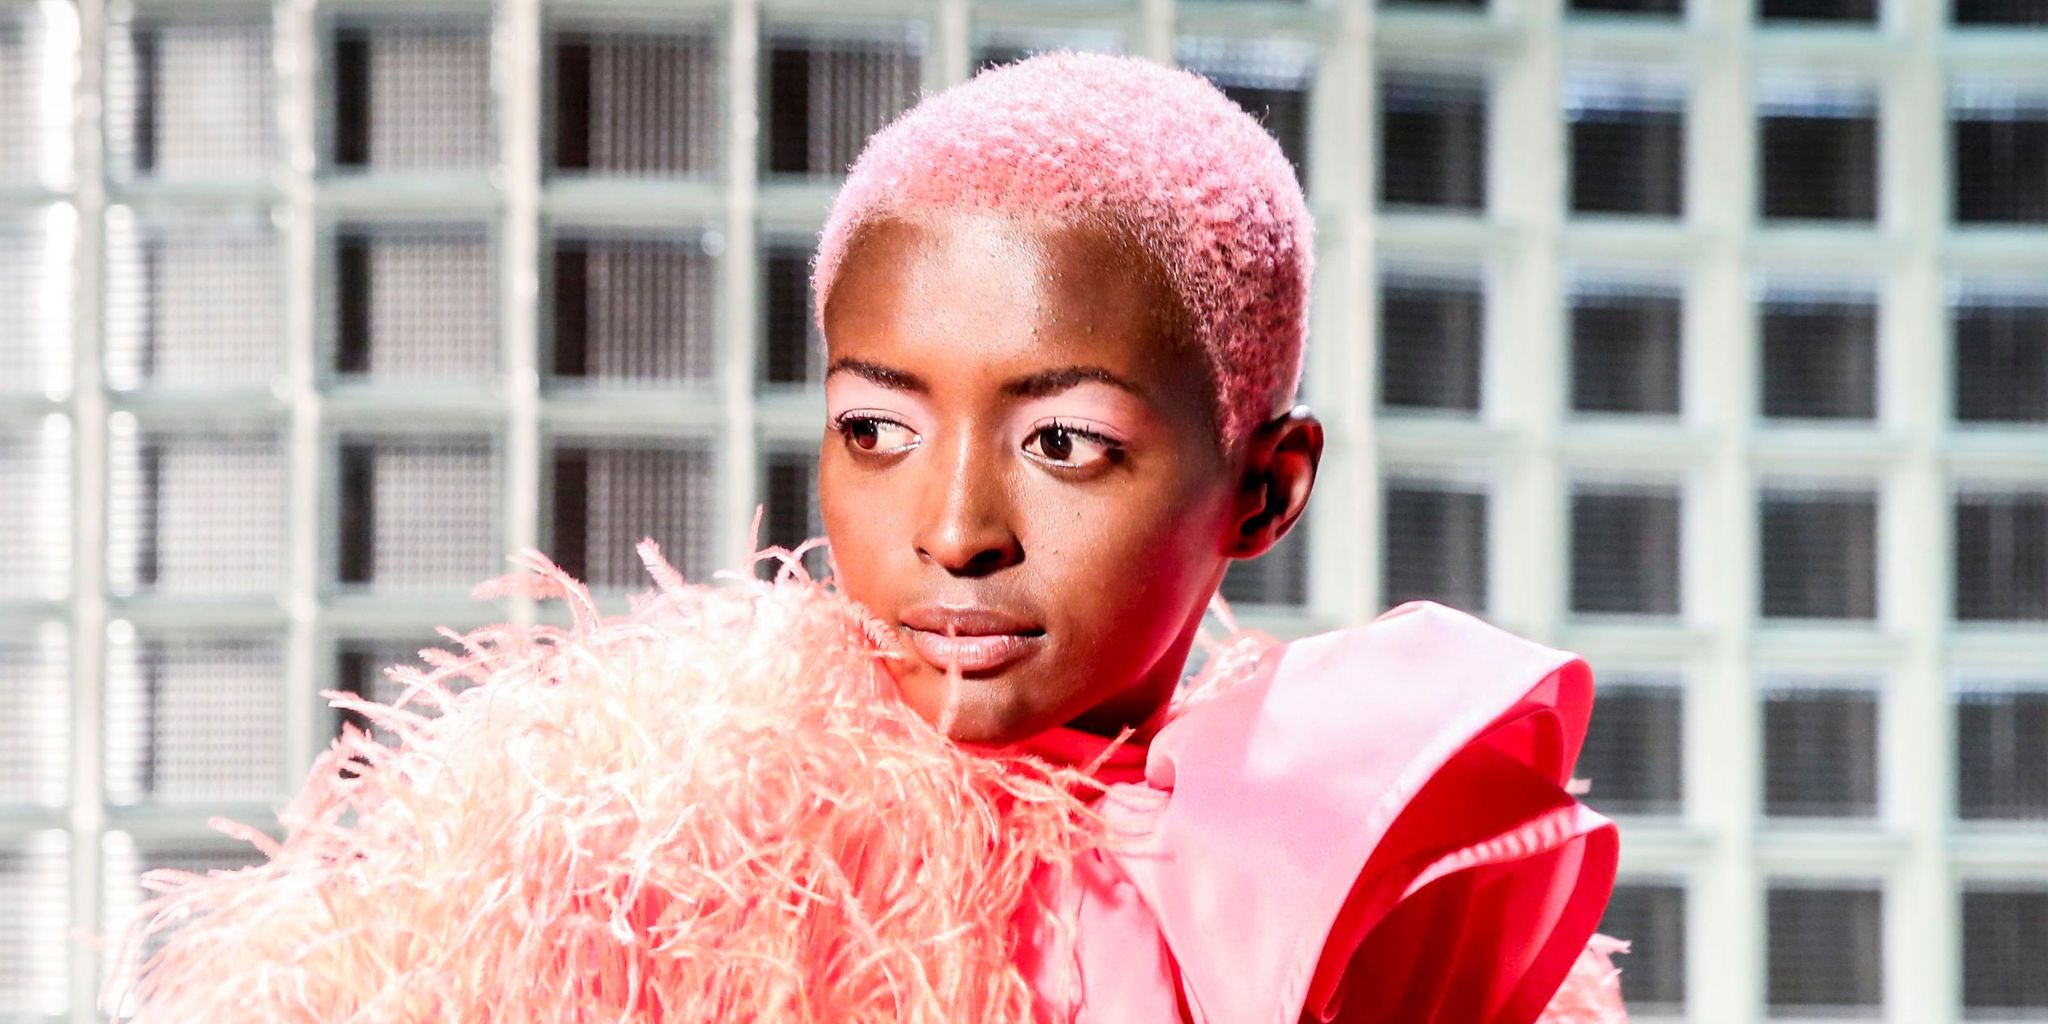 Fashion Week Street Style 2019 Trends: Hair Accessories [PHOTOS] – WWD